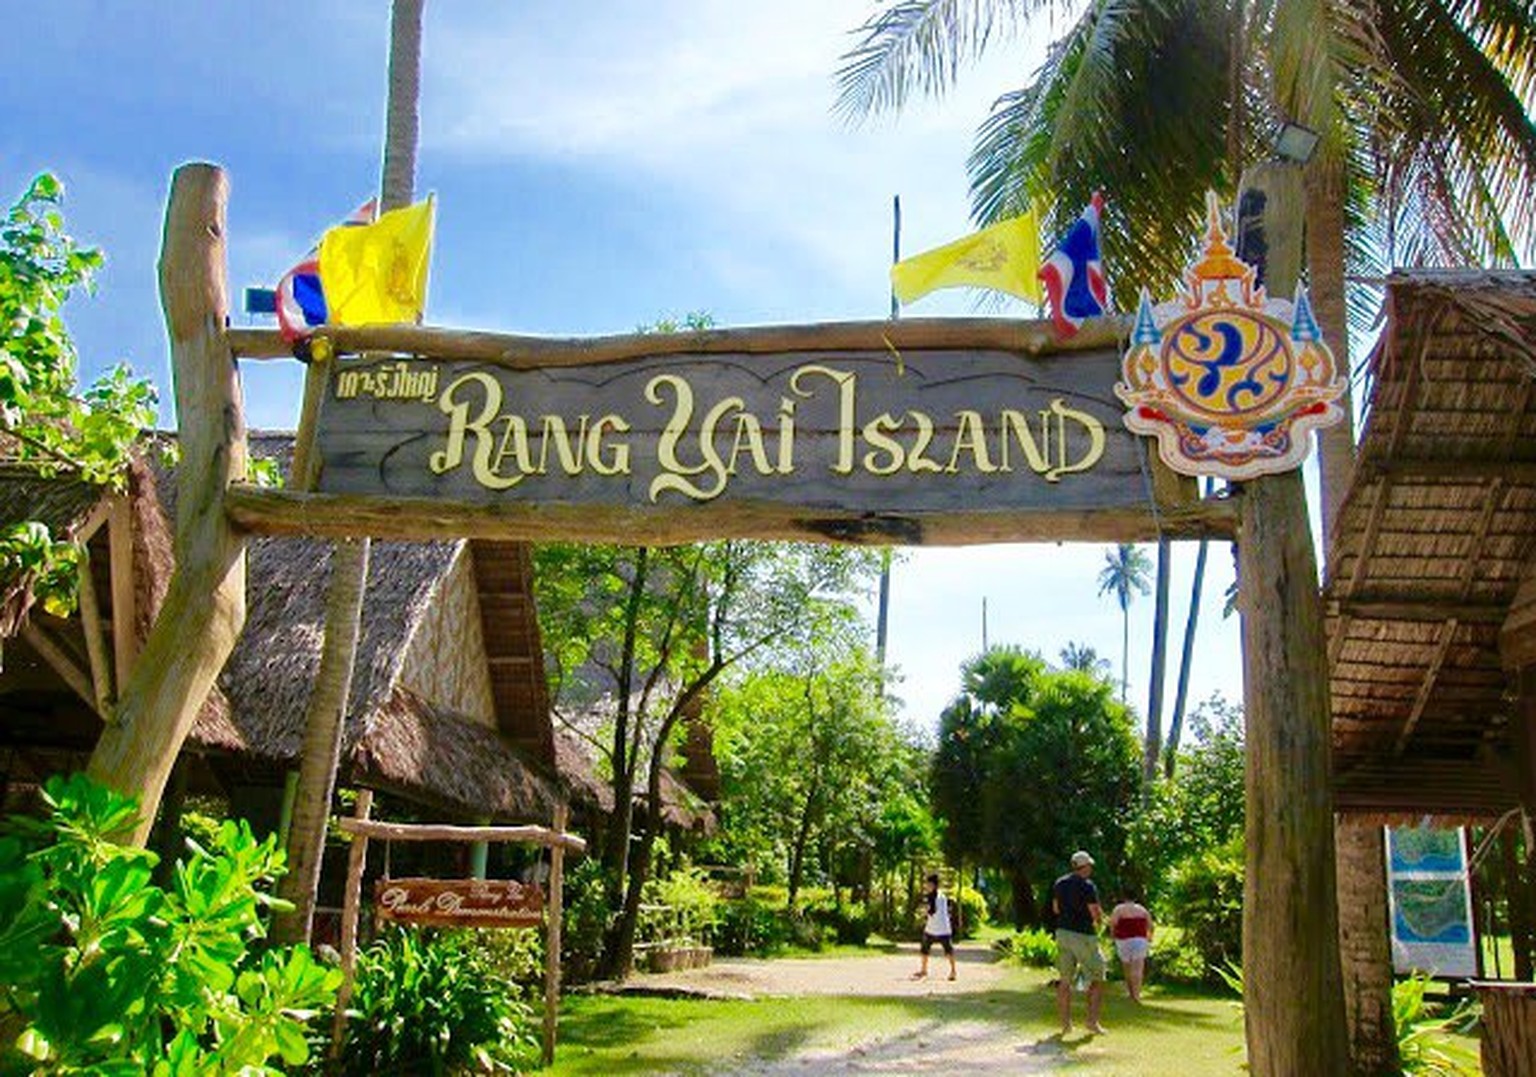 ko rang yai island phuket thailand https://www.privateislandsonline.com/asia/thailand/rangyai-island